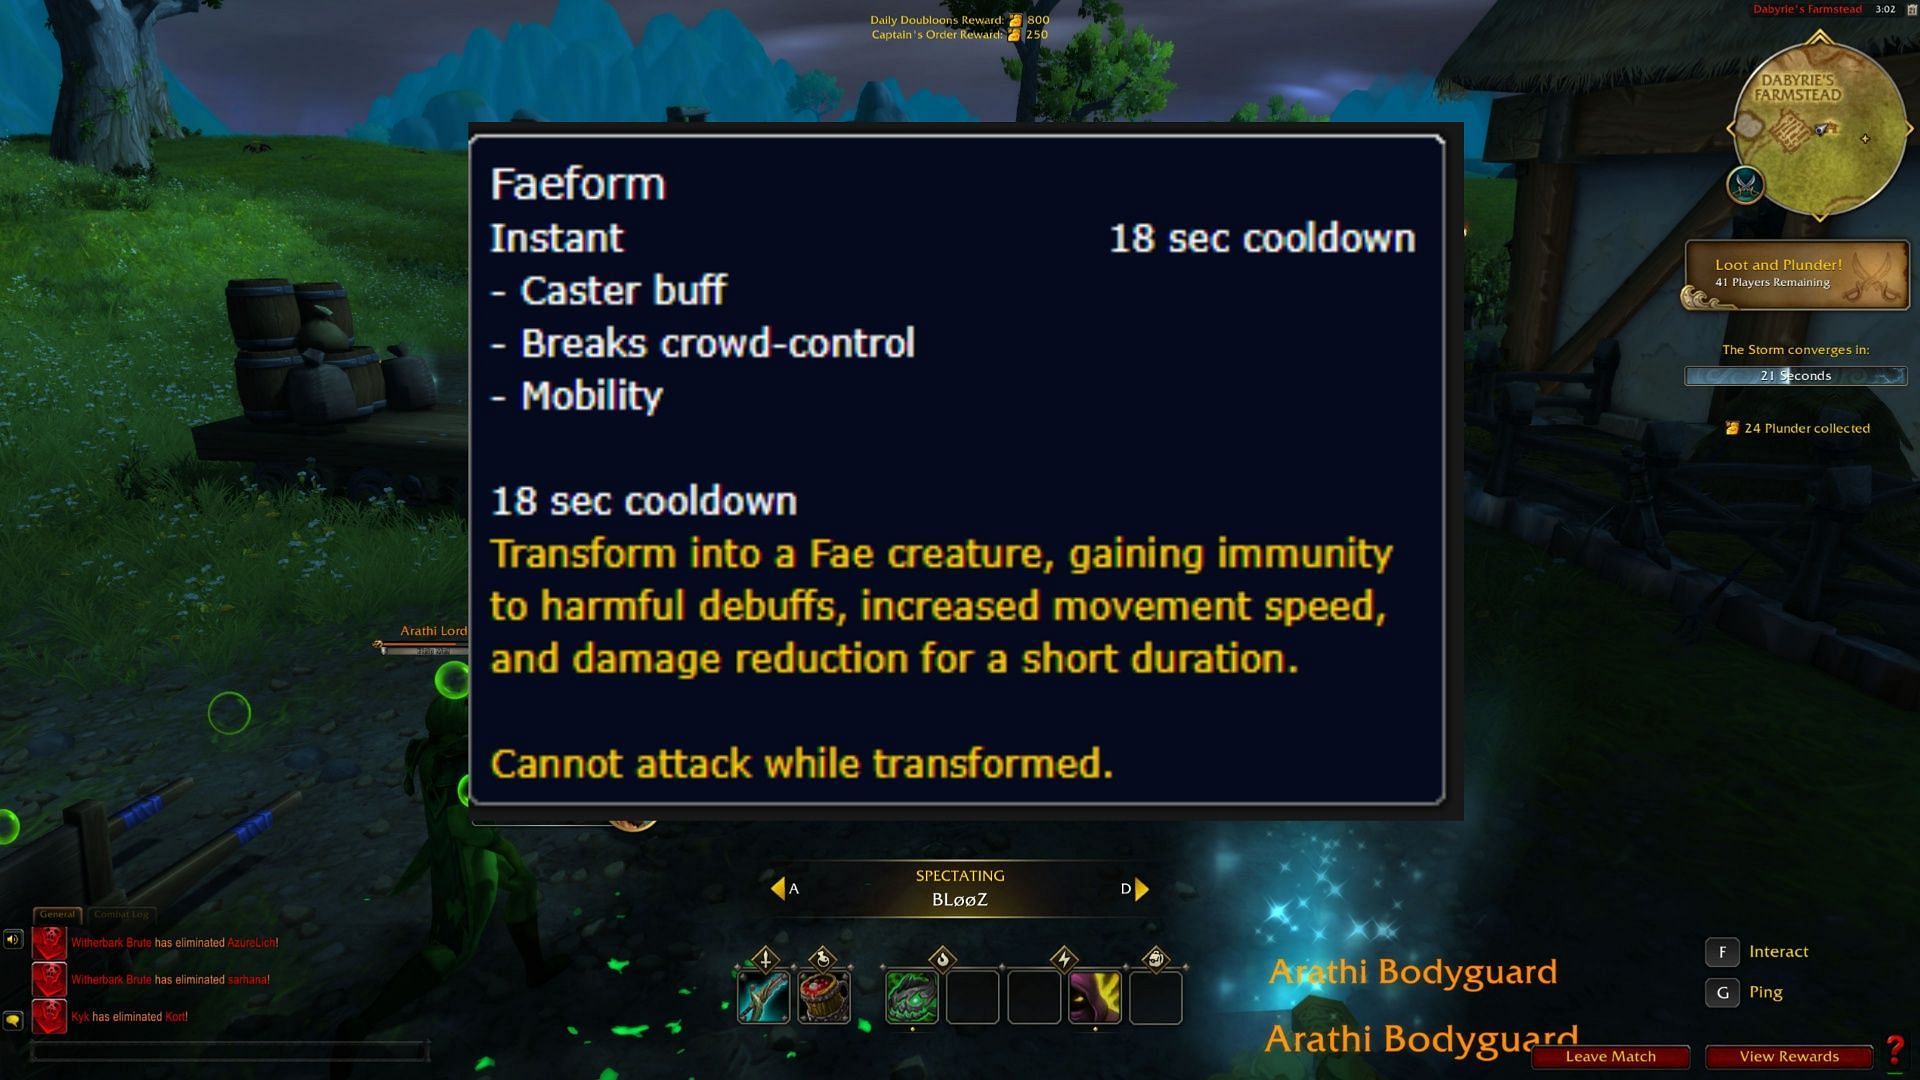 Faeform in WoW (Image via Blizzard Entertainment)